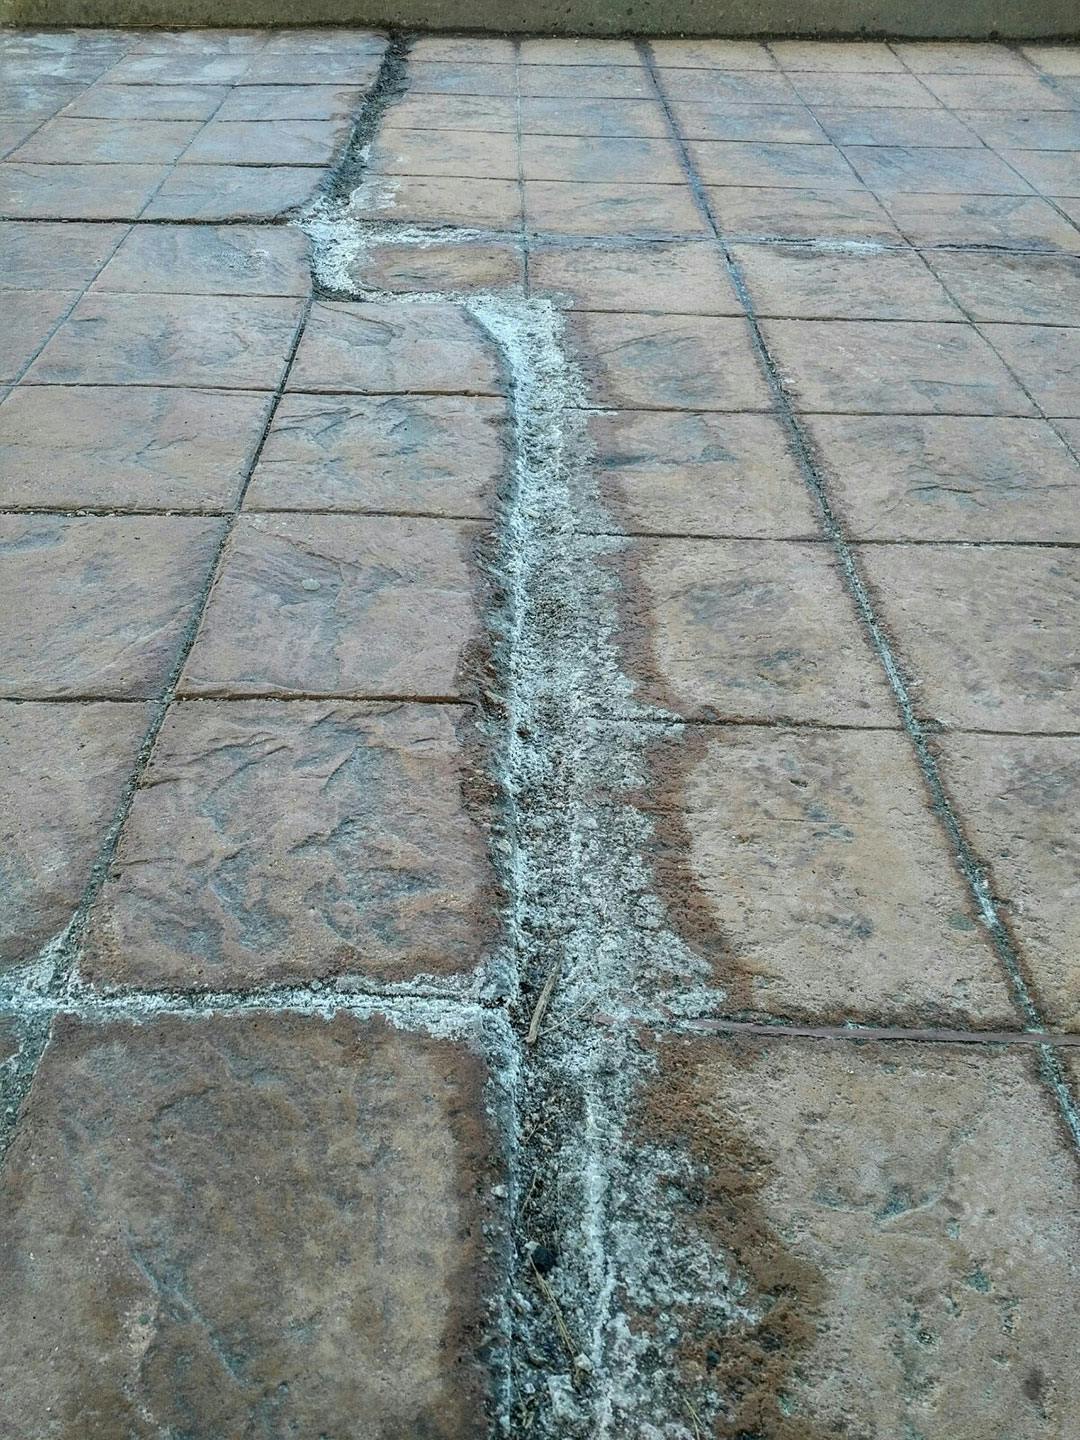 Salt damage to paving stones